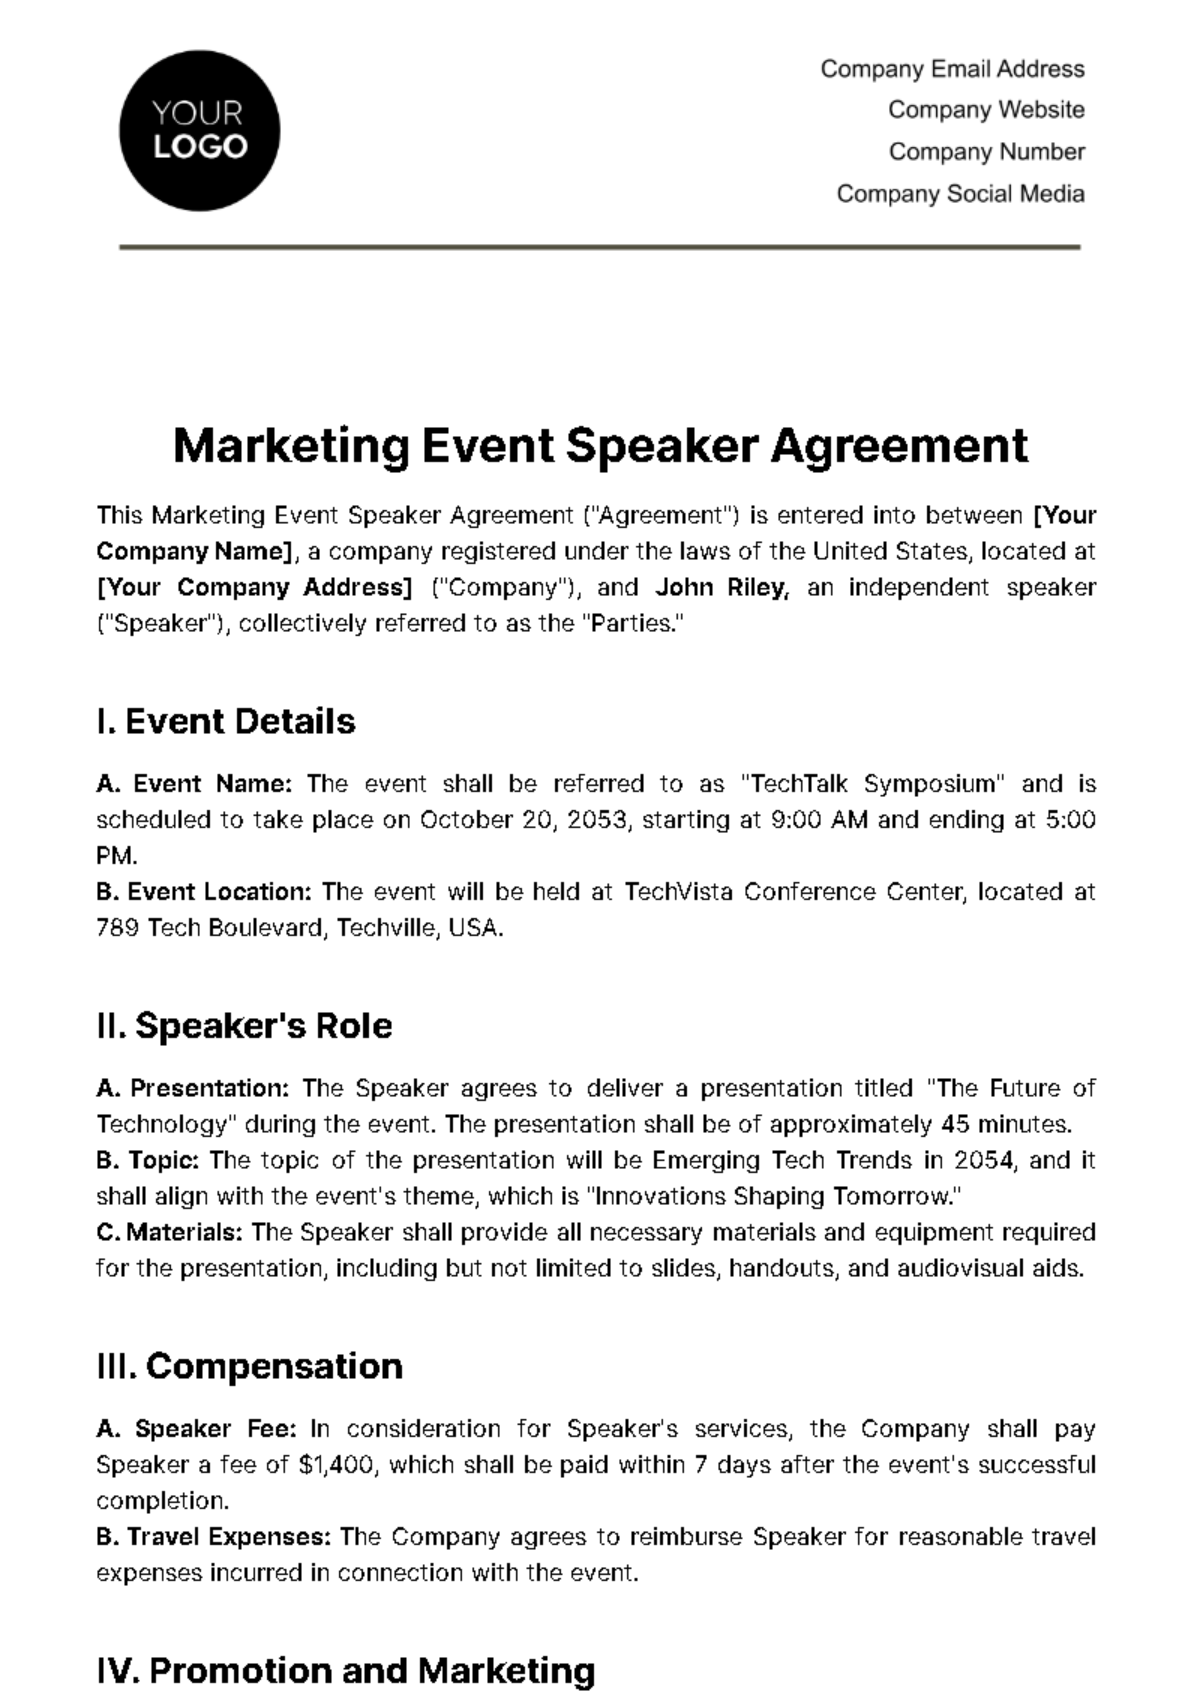 Marketing Event Speaker Agreement Template